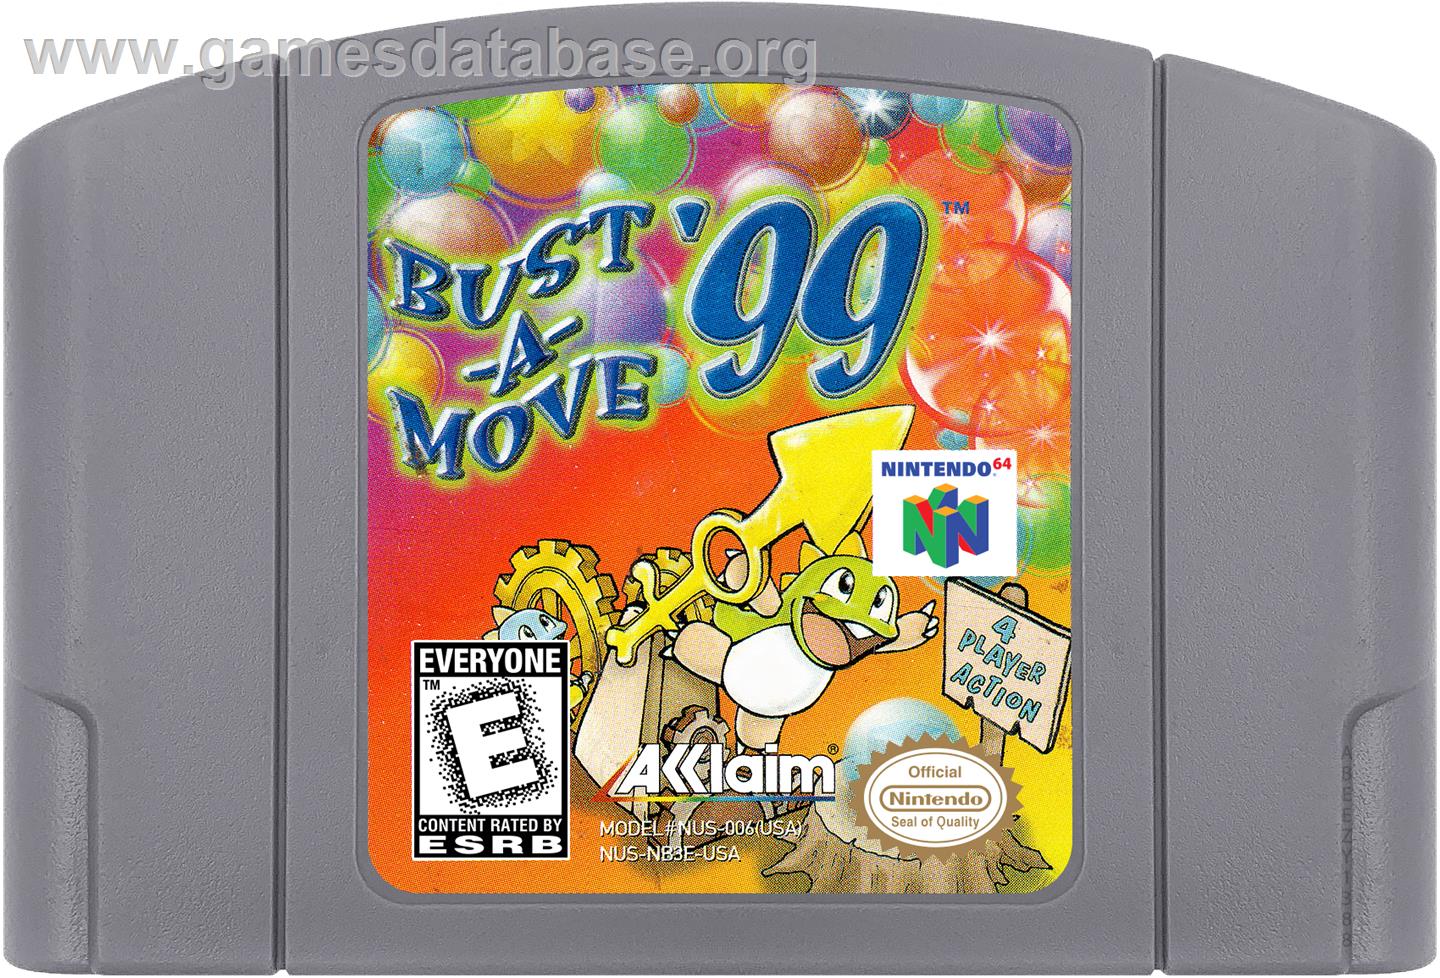 Bust a Move '99 - Nintendo N64 - Artwork - Cartridge